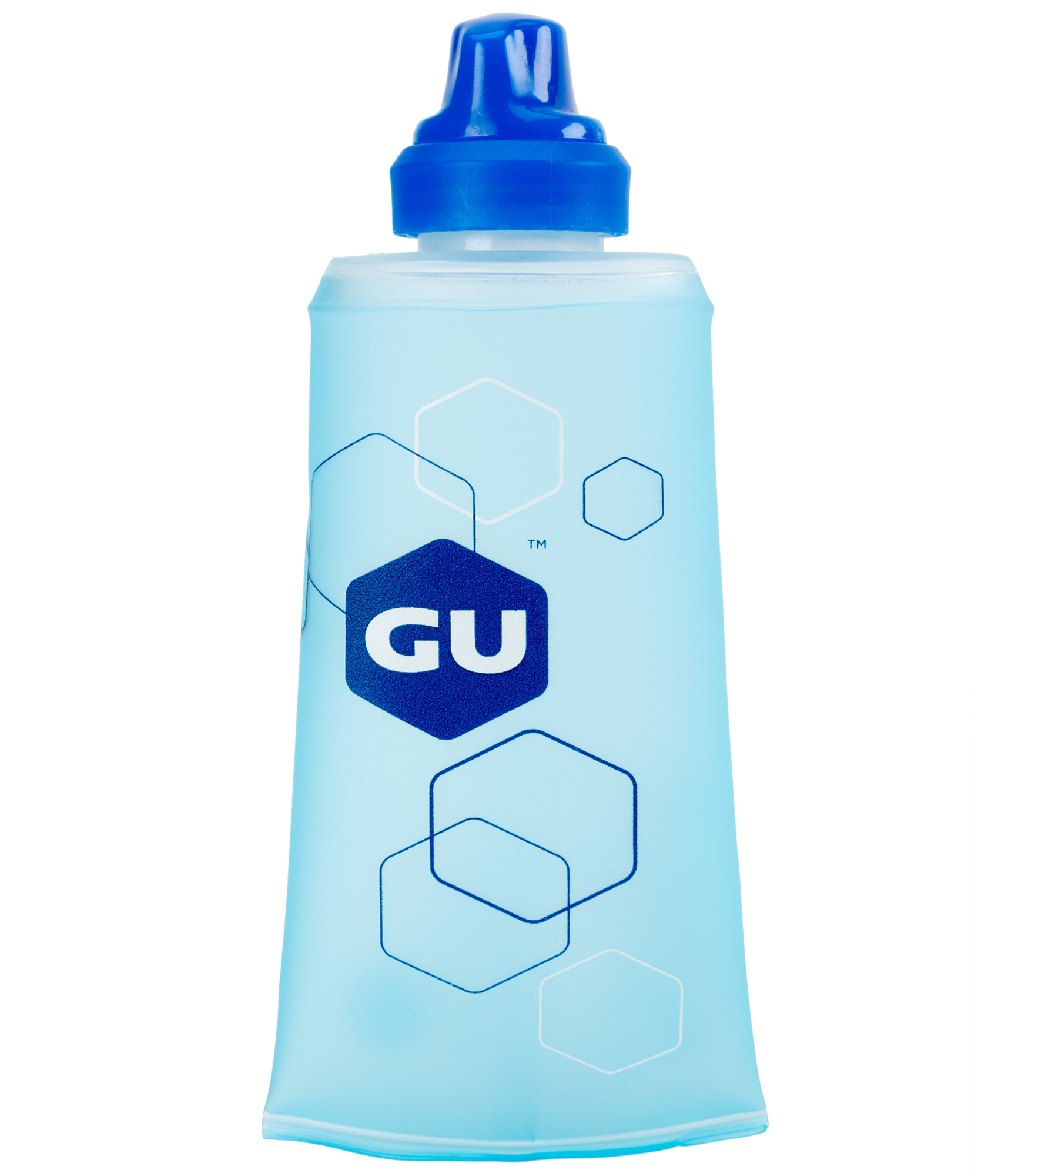 Gu Flask For 5 Servings Of Energy Gel - Blue - Swimoutlet.com